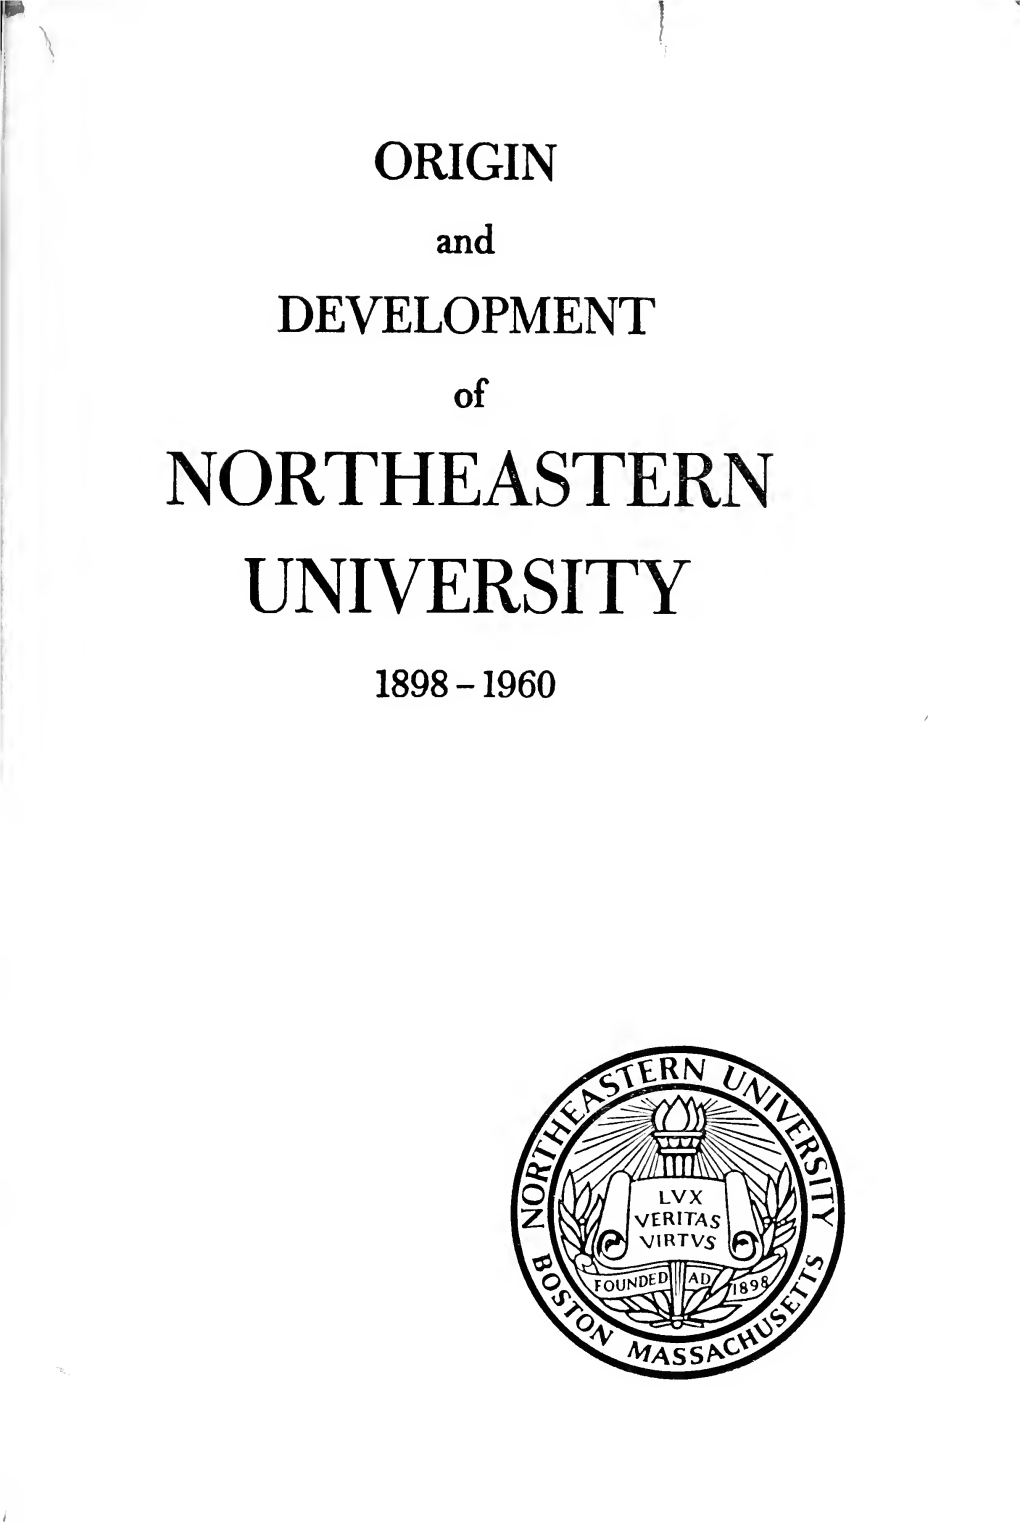 Origin and Development of Northeastern University, 1898-1960